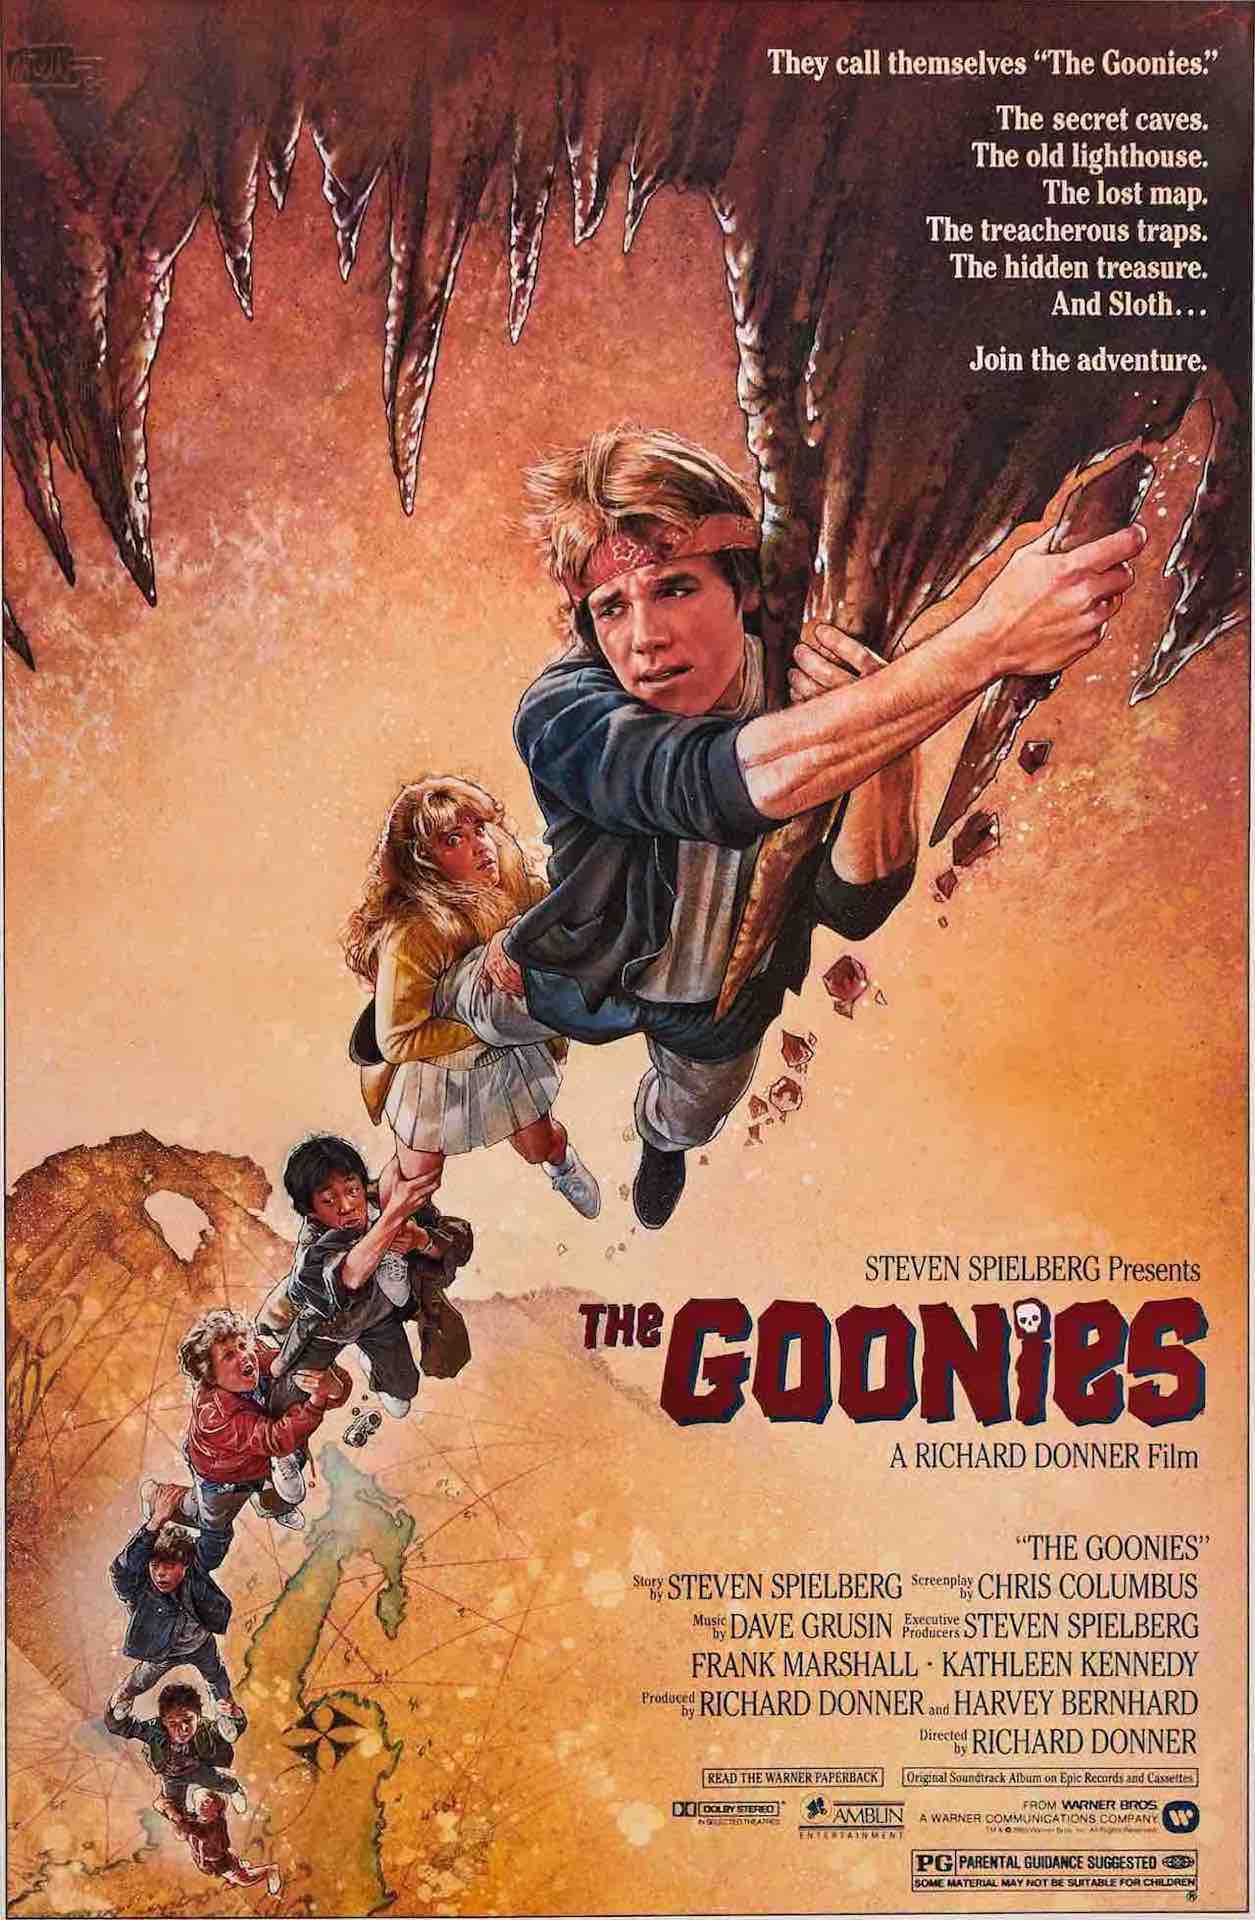 Drew Struzan's original poster art for The Goonies.